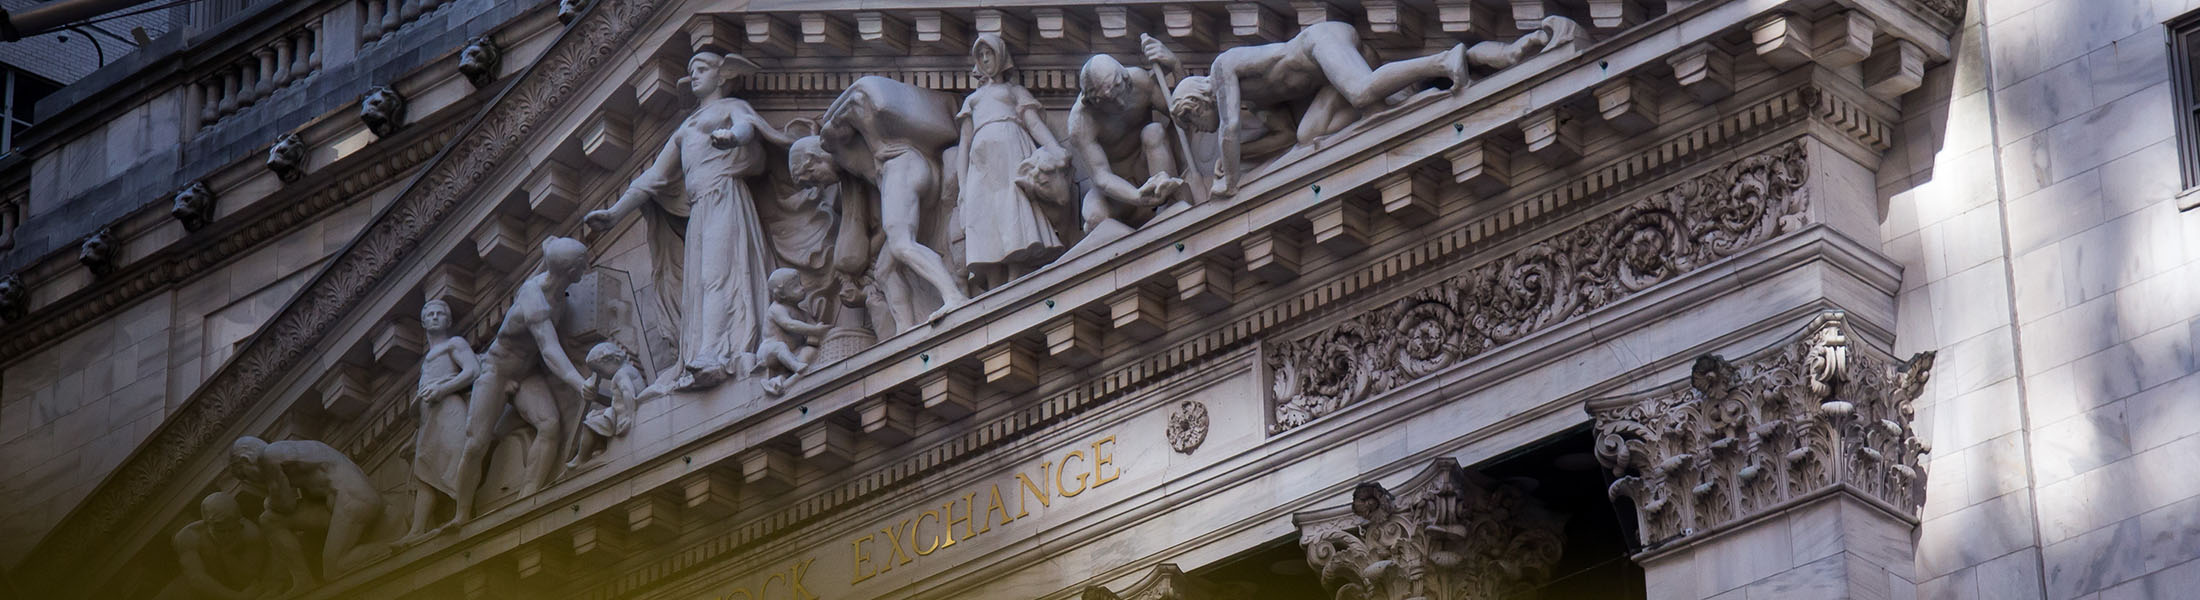 The New York Stock Exchange (NYSE)